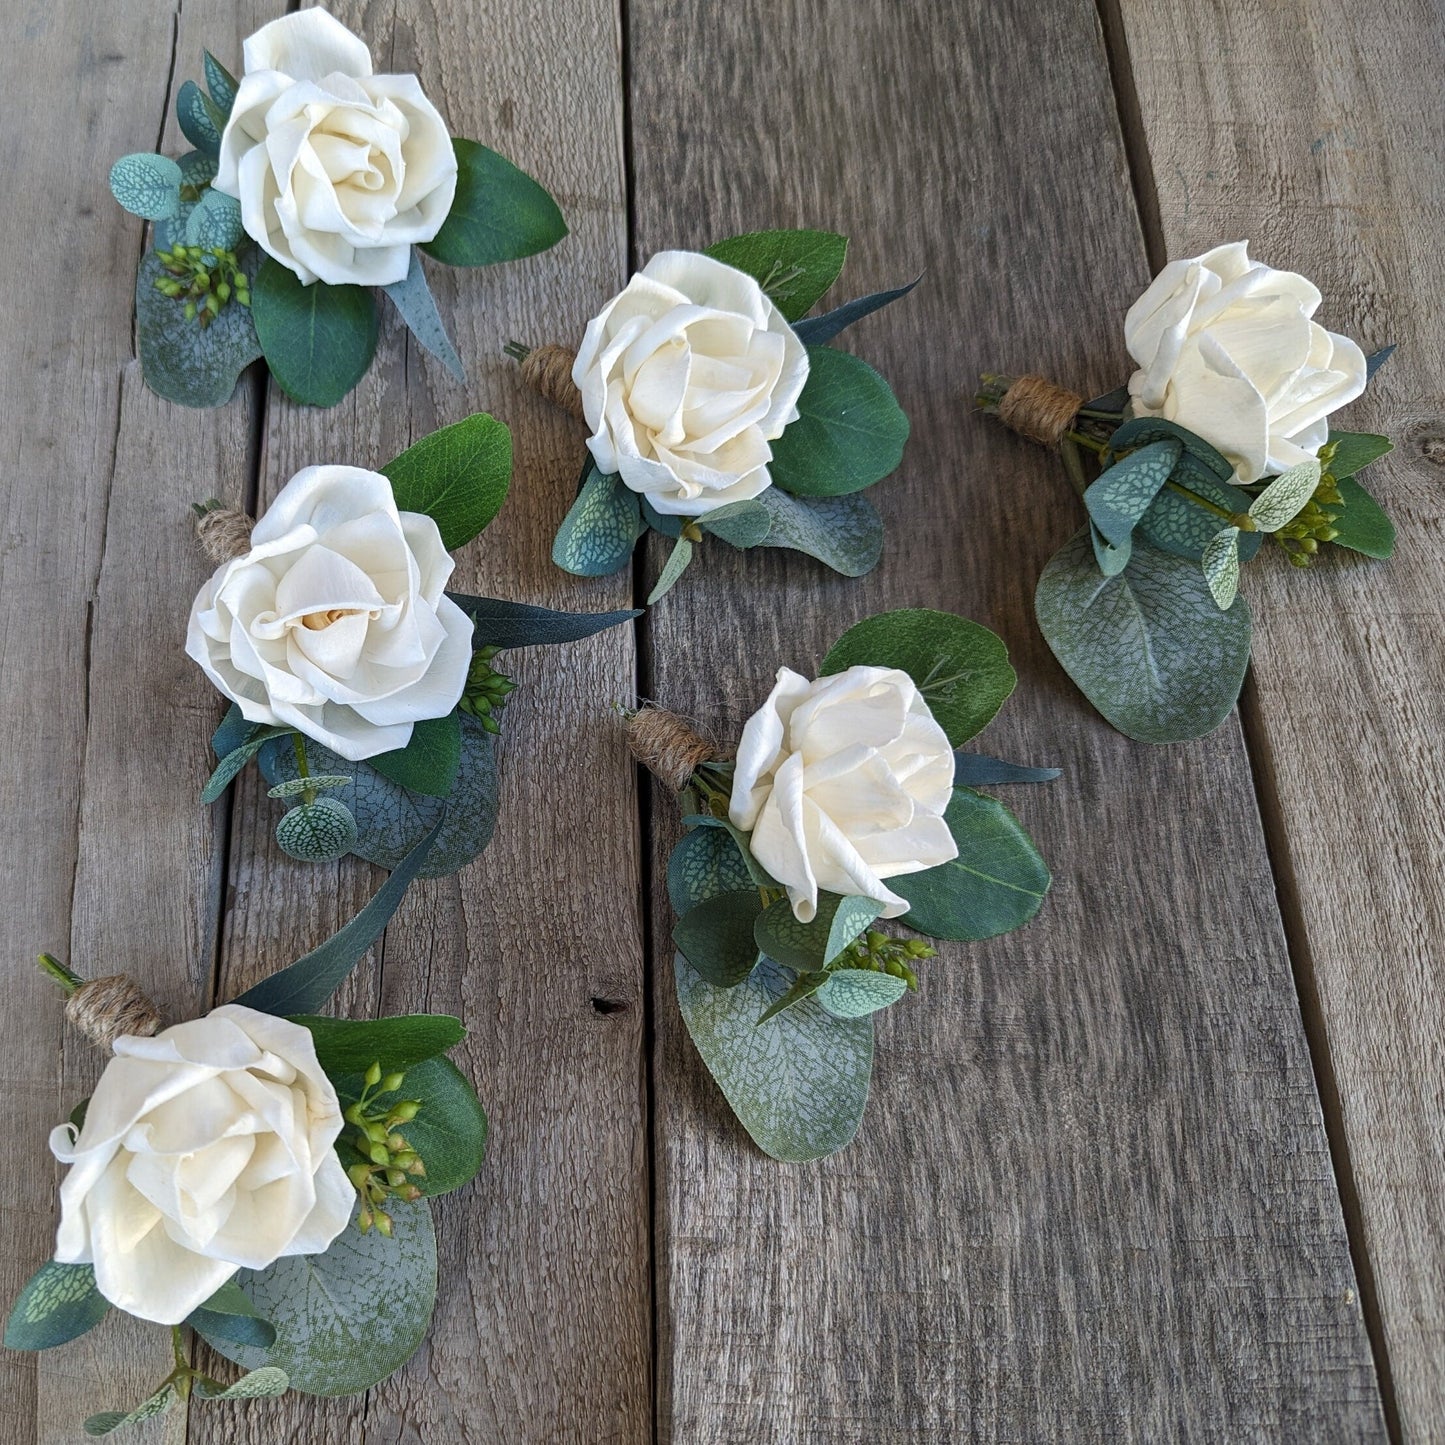 Wood Rose Boutonniere, Groomsmen Boutonniere, Wooden Lapel Pin, Groom Lapel Flower, Sola Wood Flowers